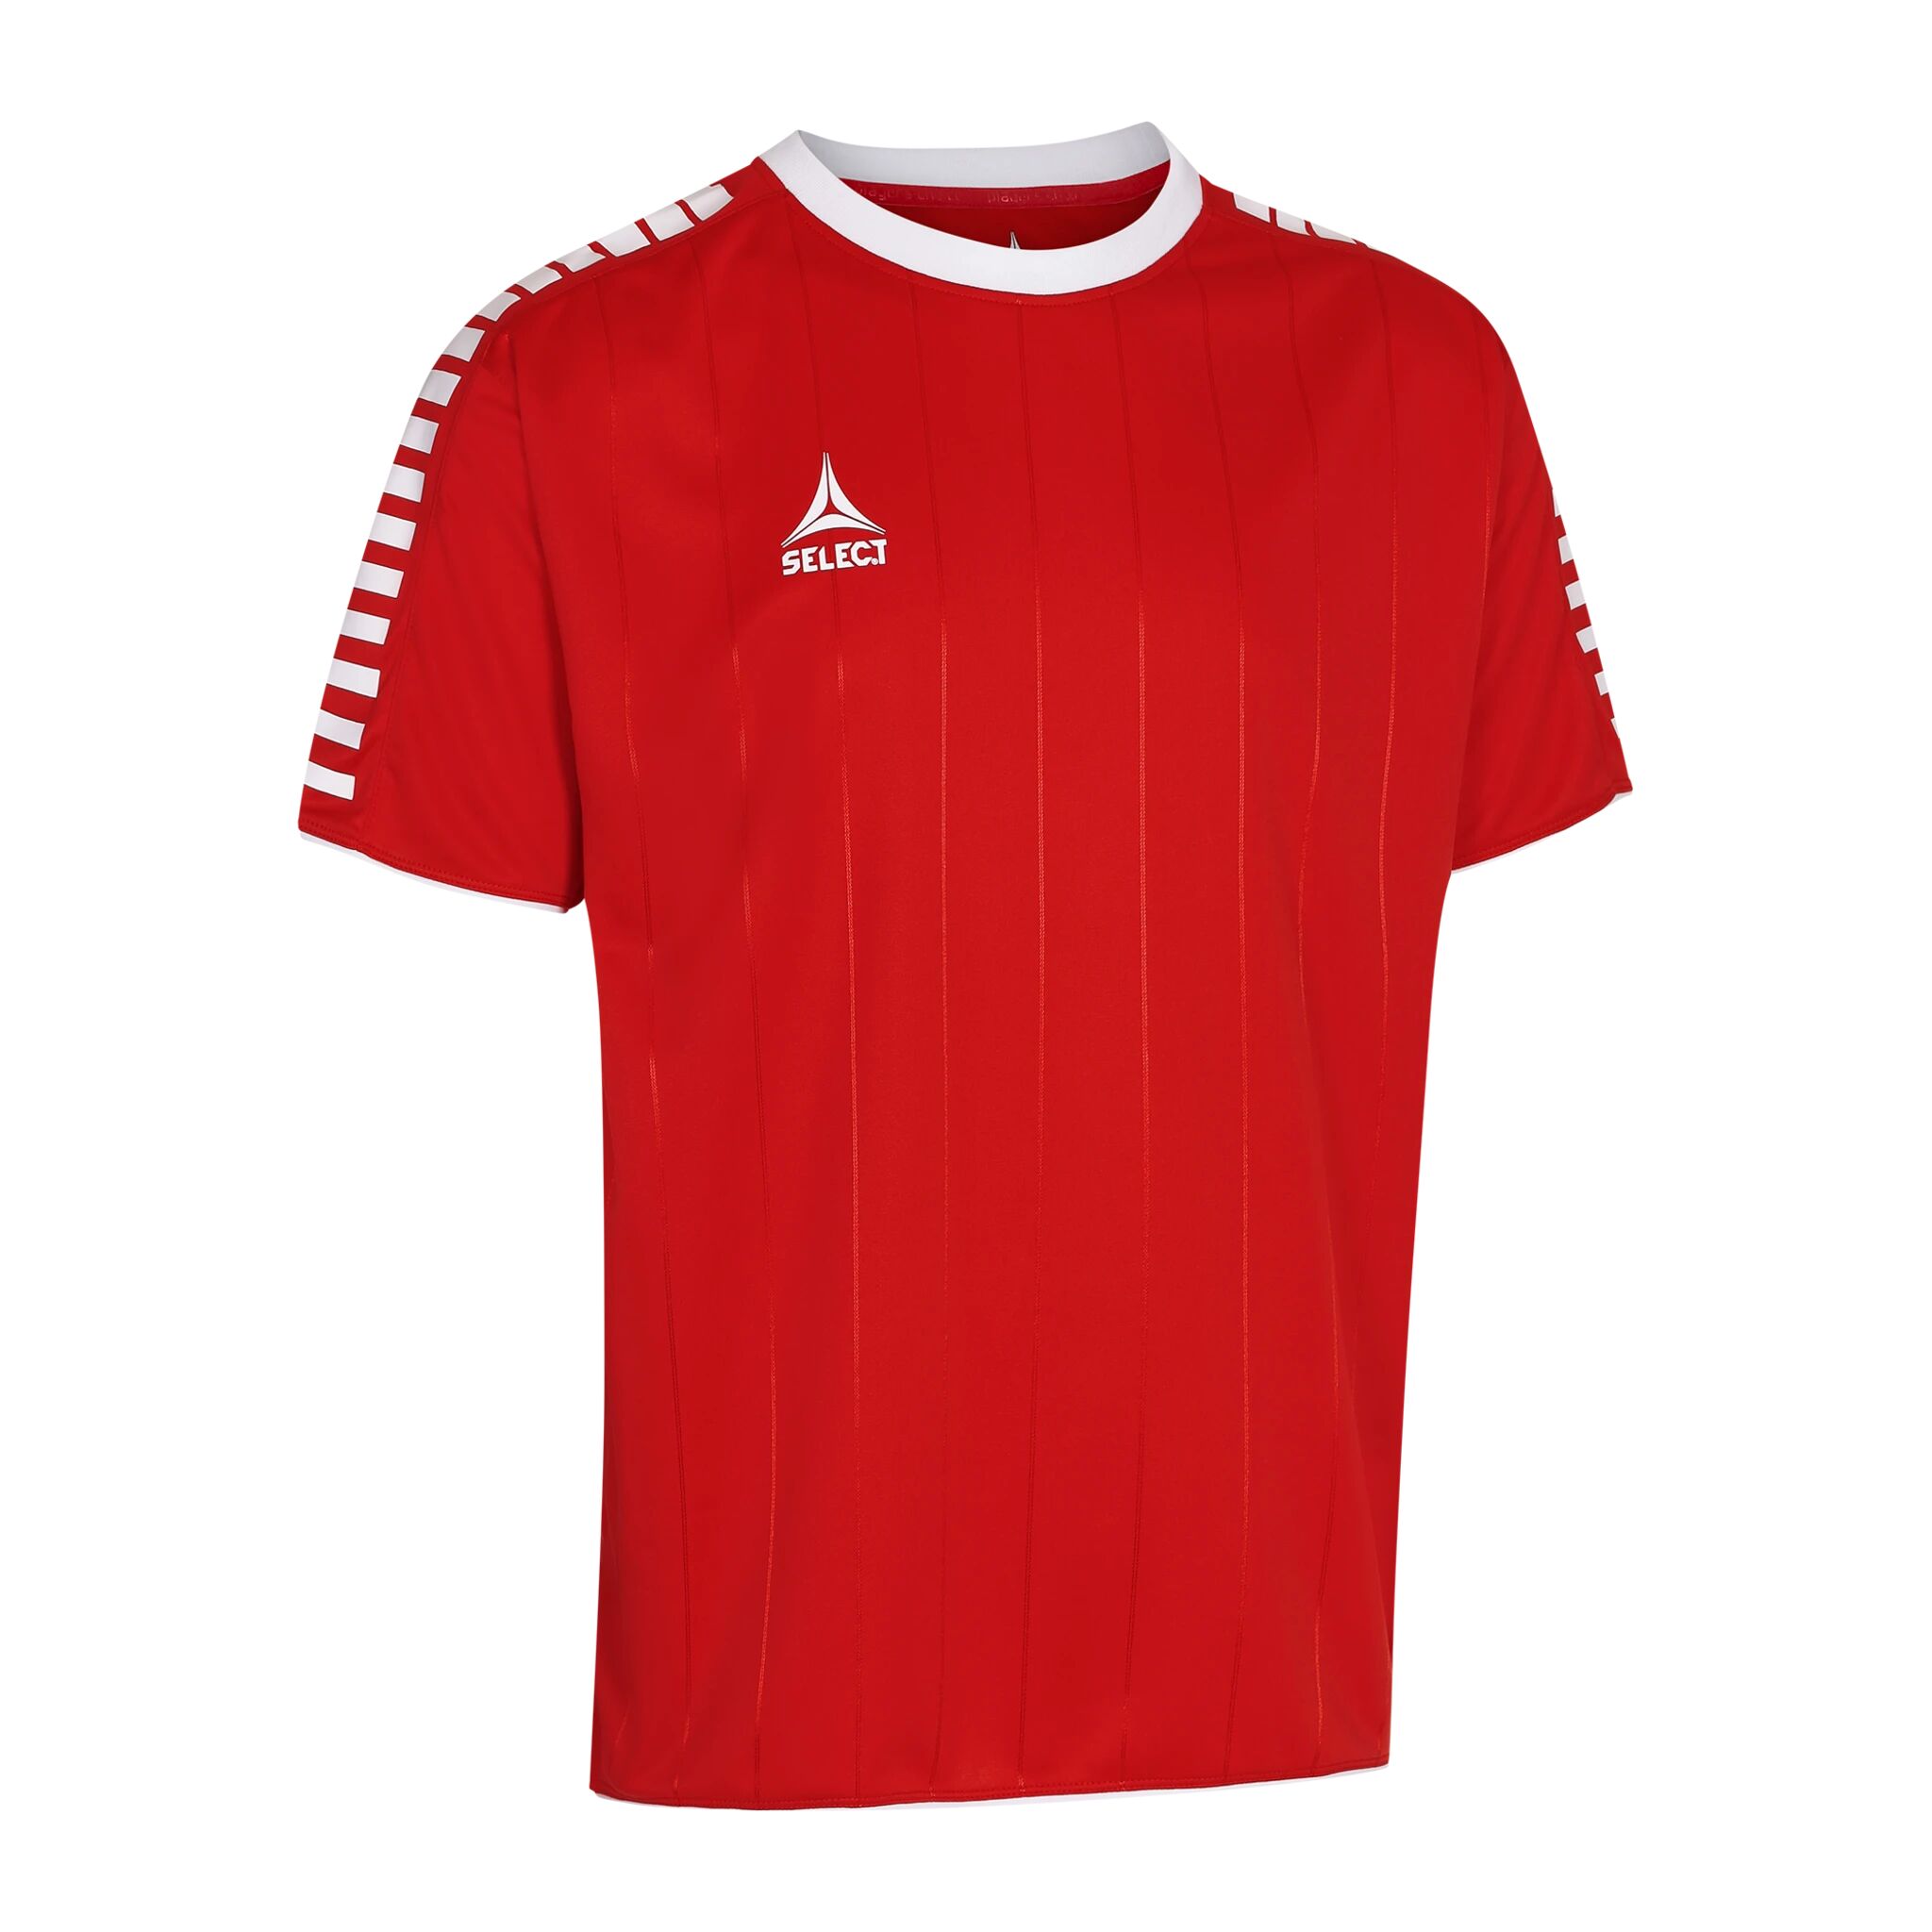 Select Player shirt S/S Argentina, fotballtrøye senior XXL RED